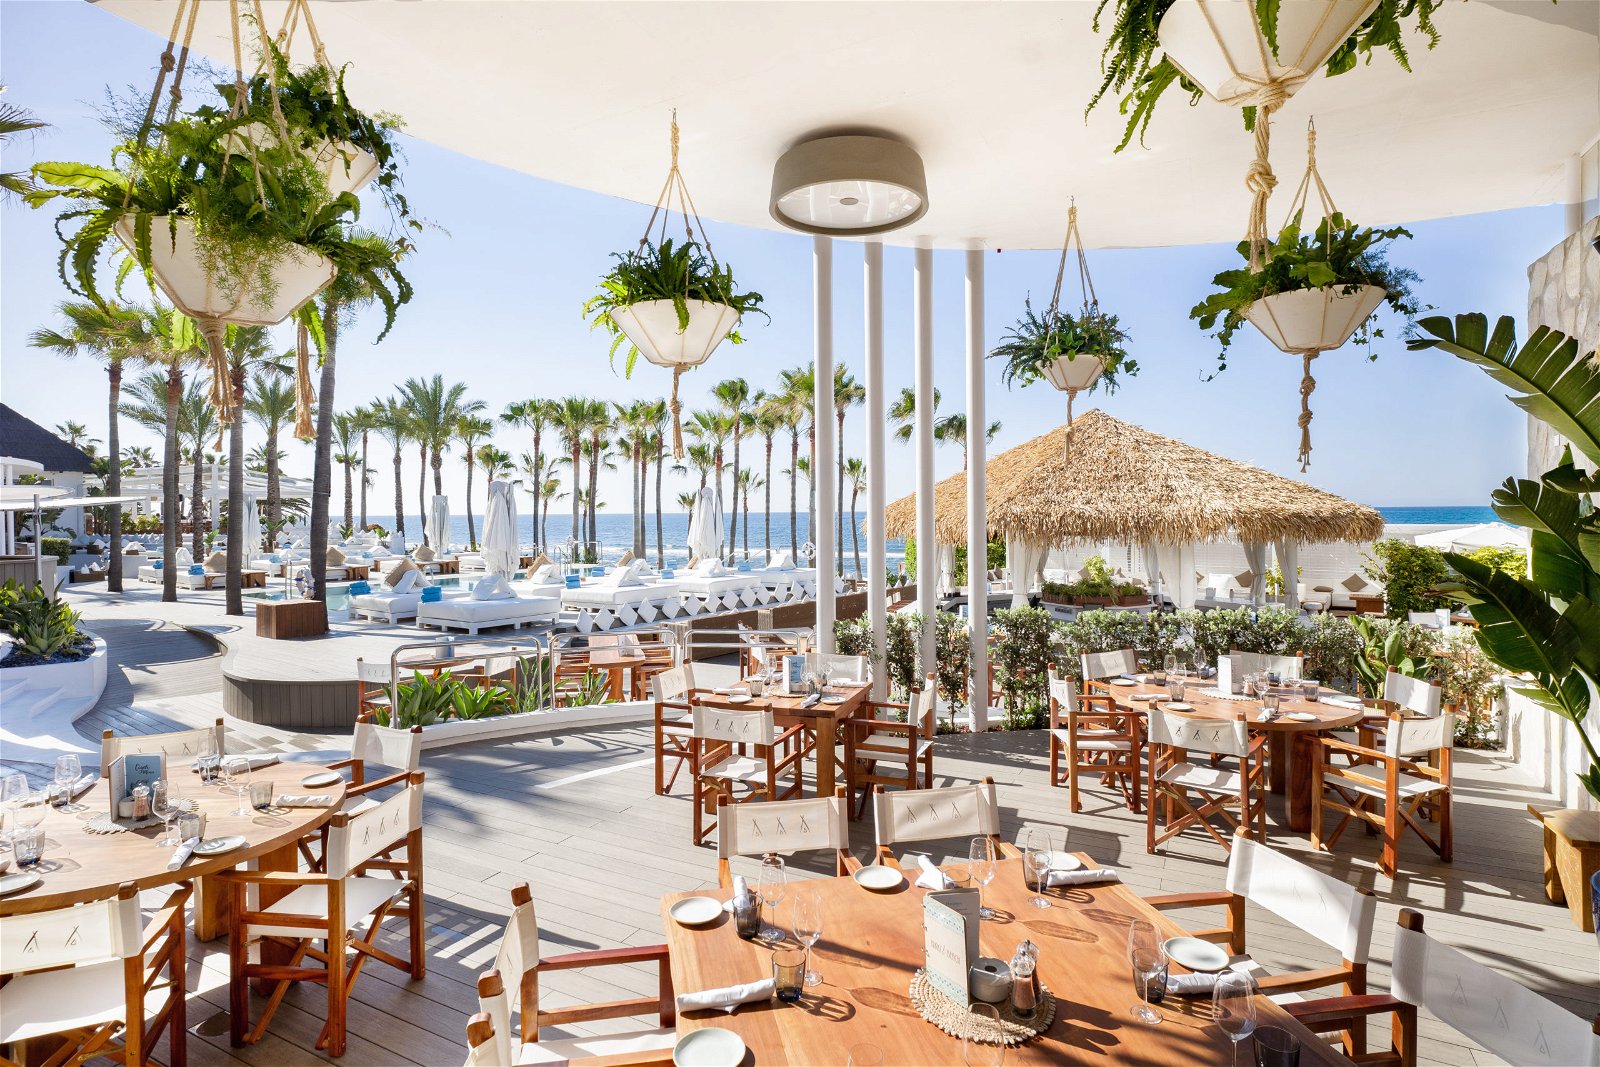 Nikki Beach Marbella 2020 Prices